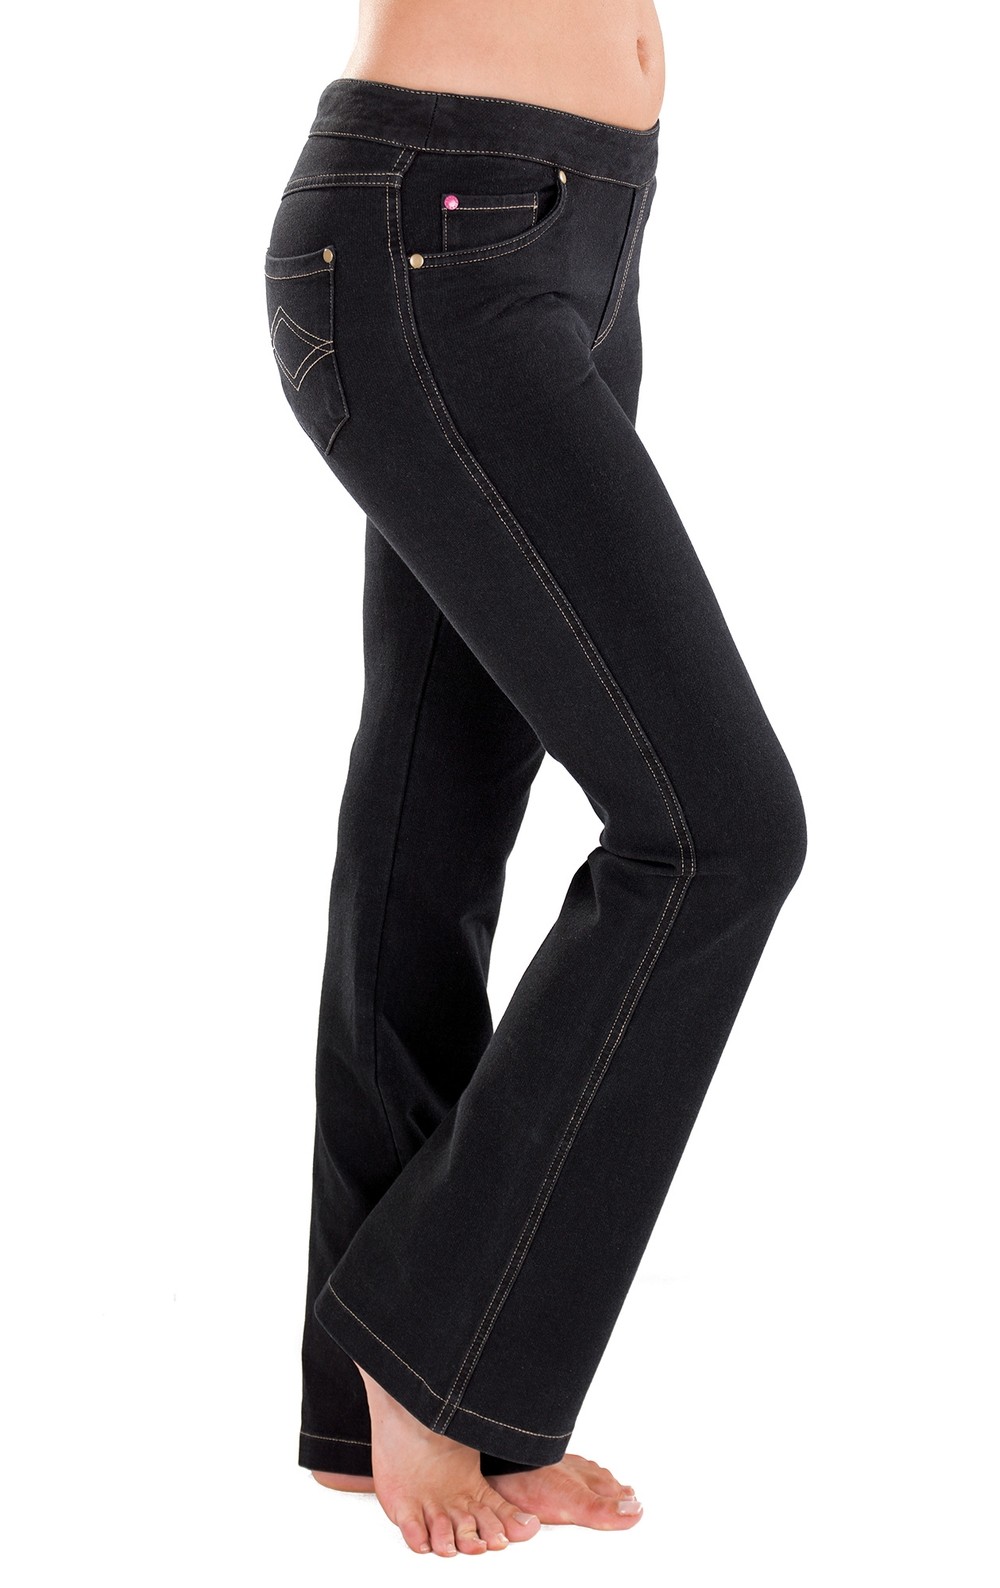 PajamaJeans Womens Petite Bootcut Stretch Knit Denim Jeans